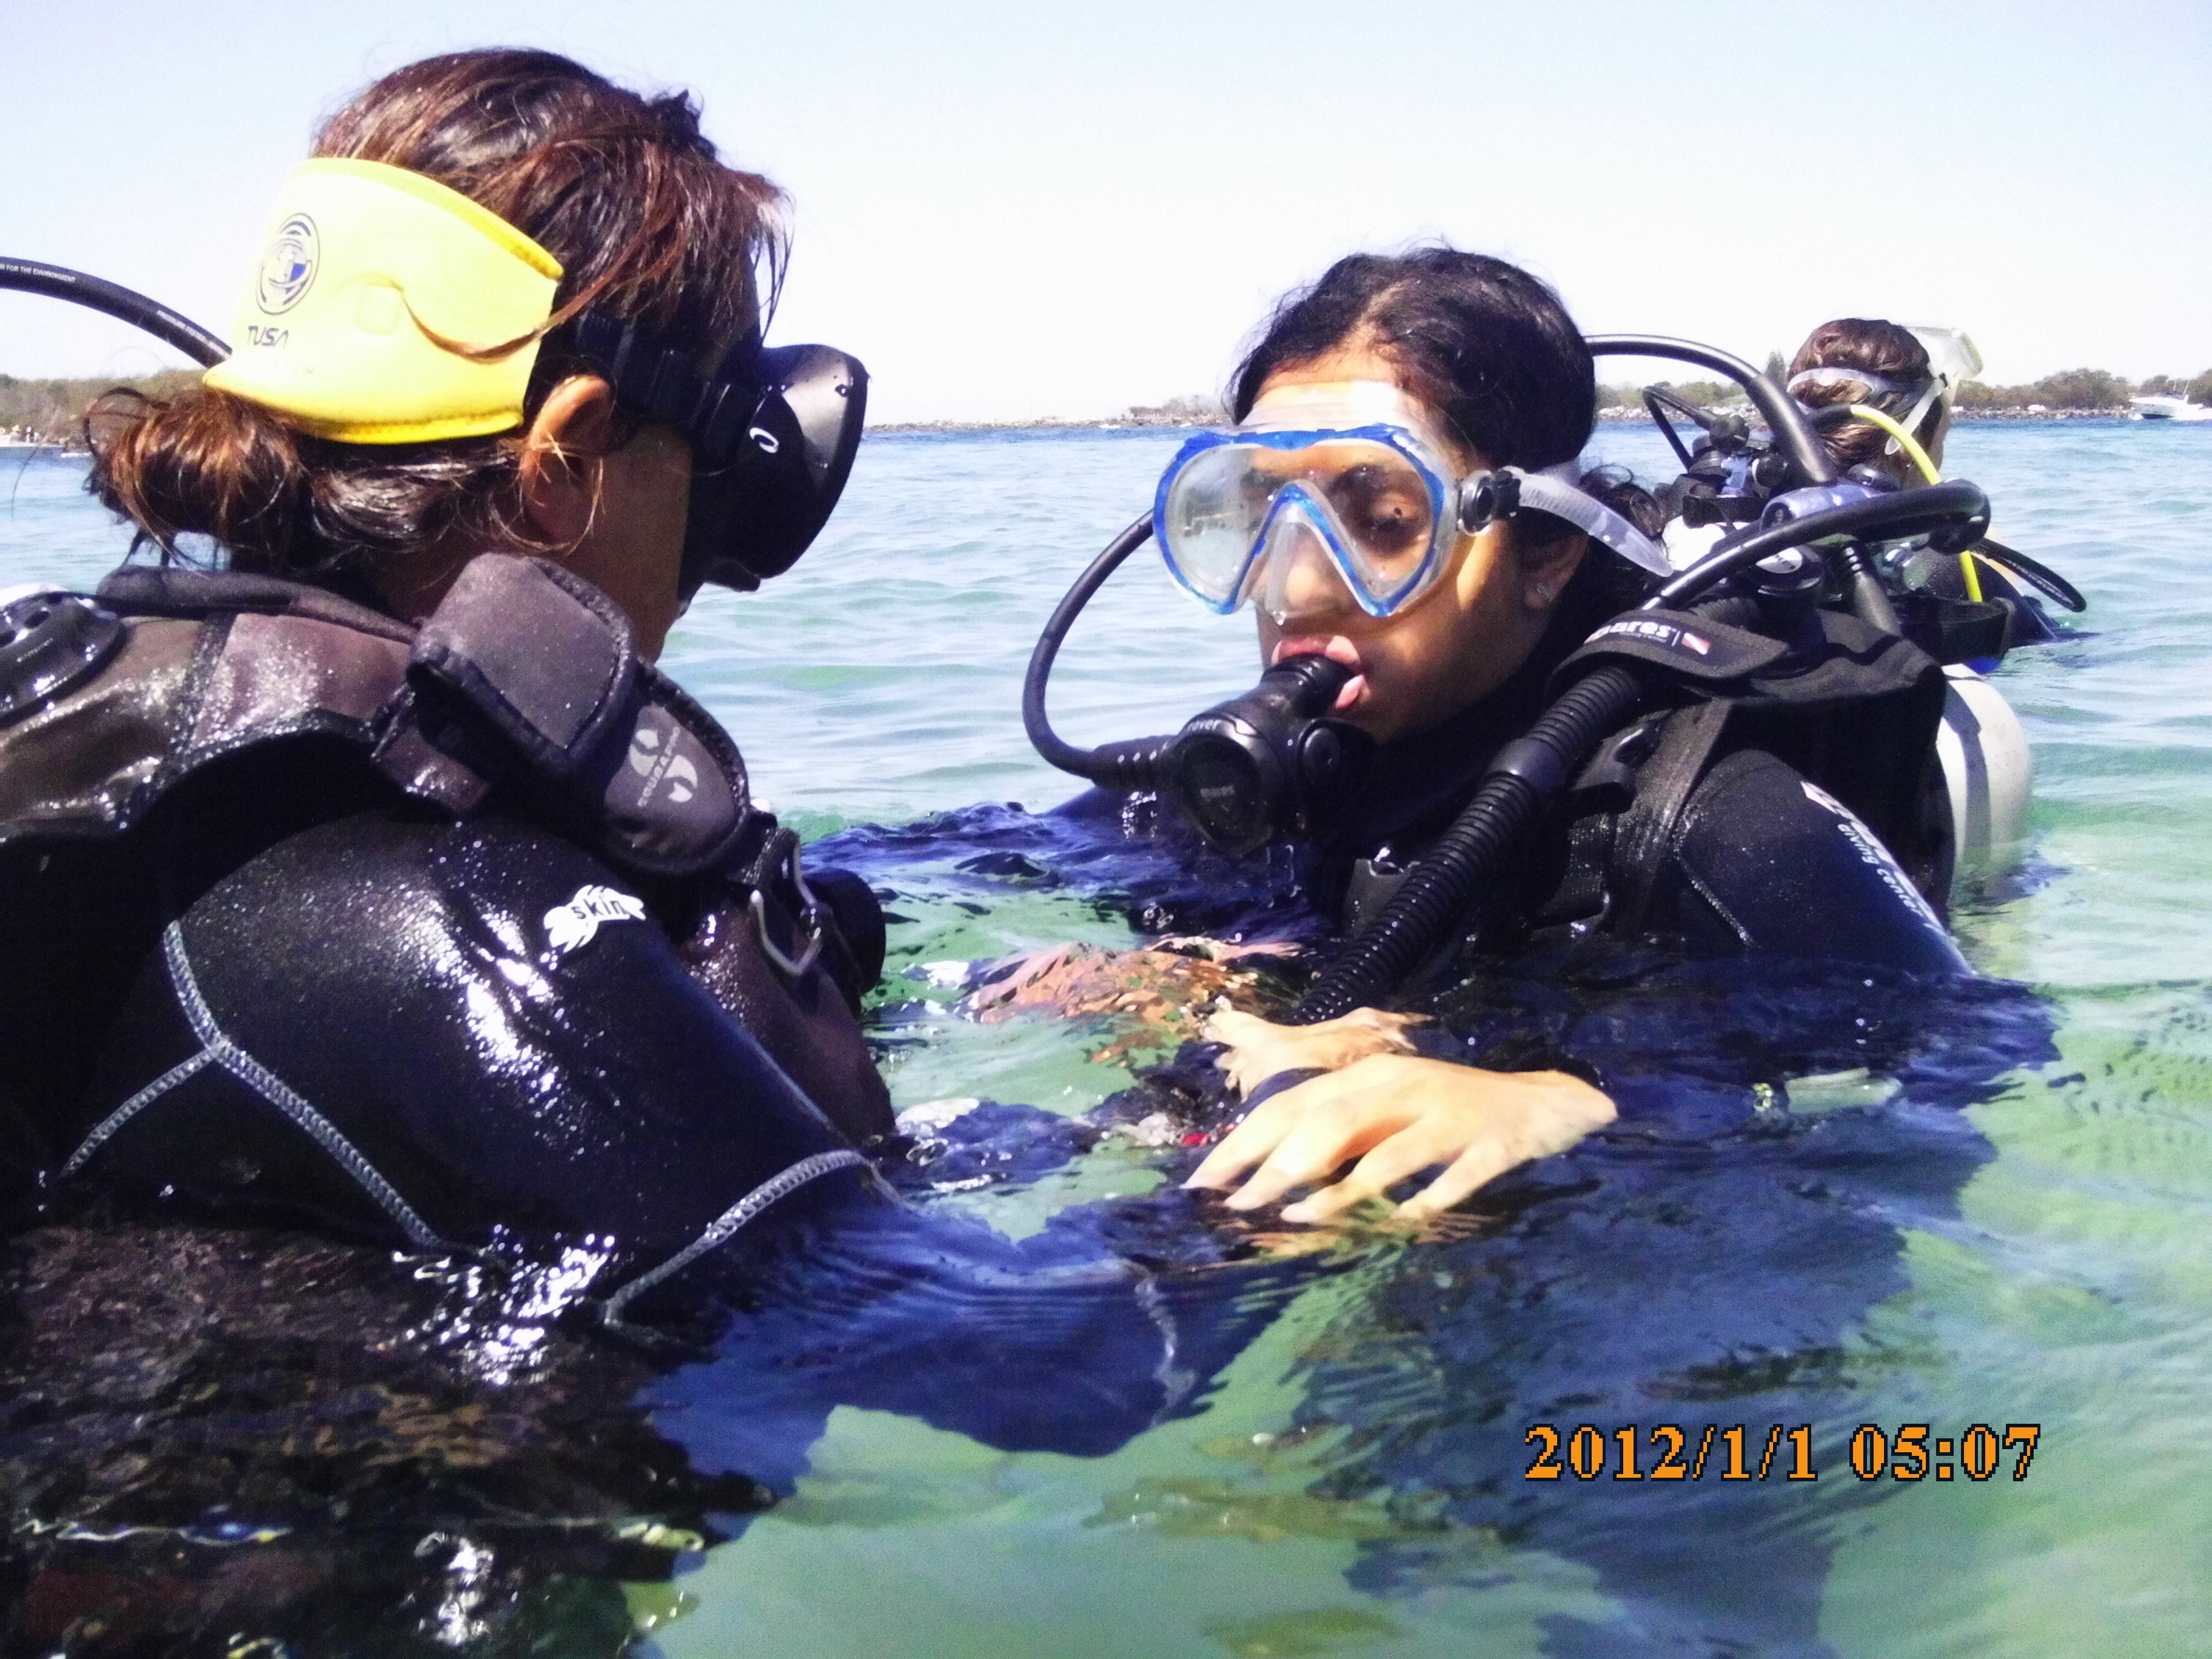 Queensland Scuba Diving Company in Gold Coast